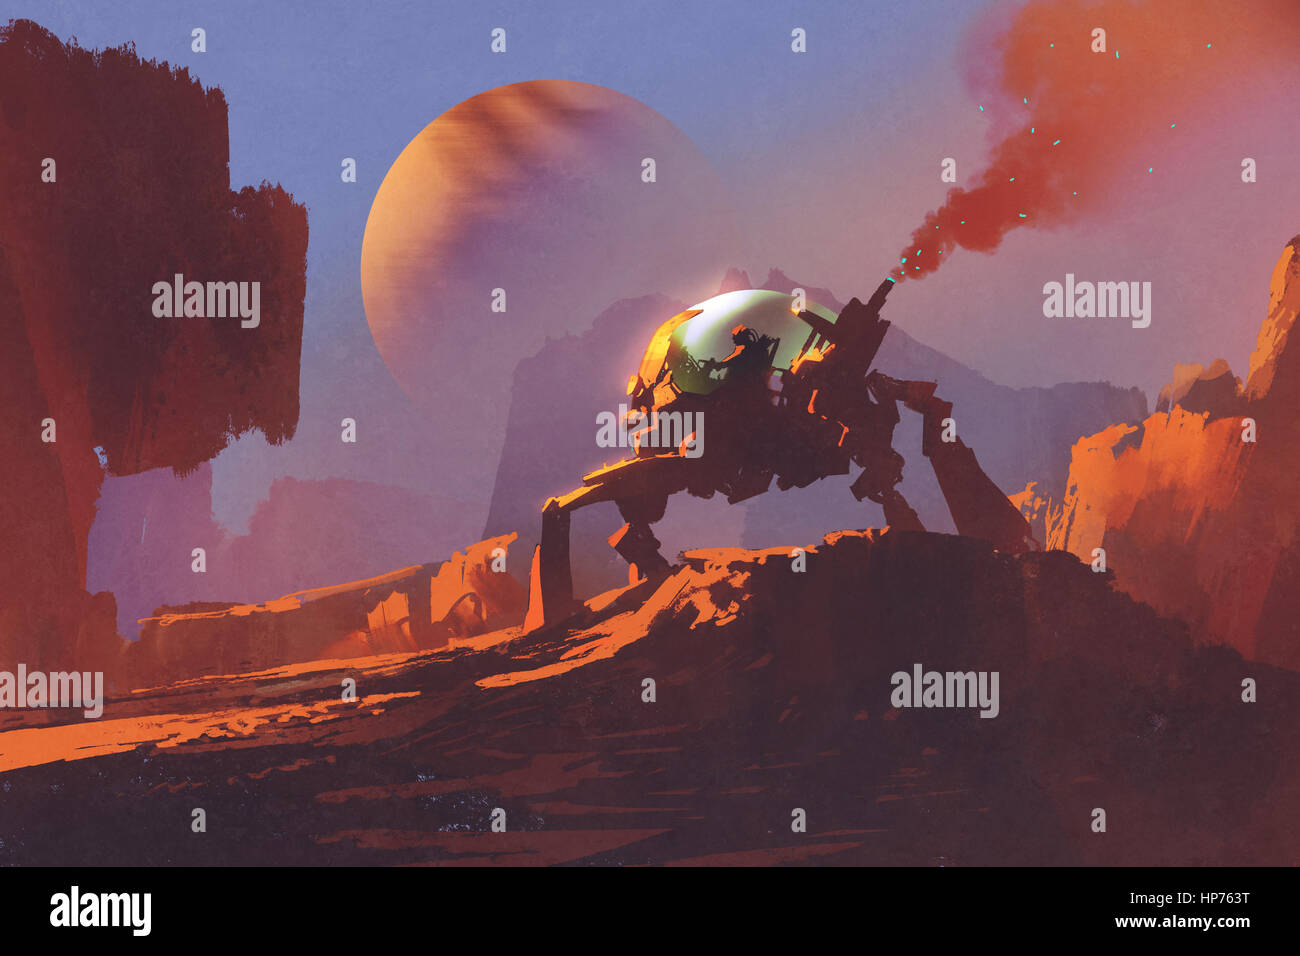 Sci-Fi-Szene des Mannes in das Roboterfahrzeug auf roten Planeten, Illustration, Malerei Stockfoto